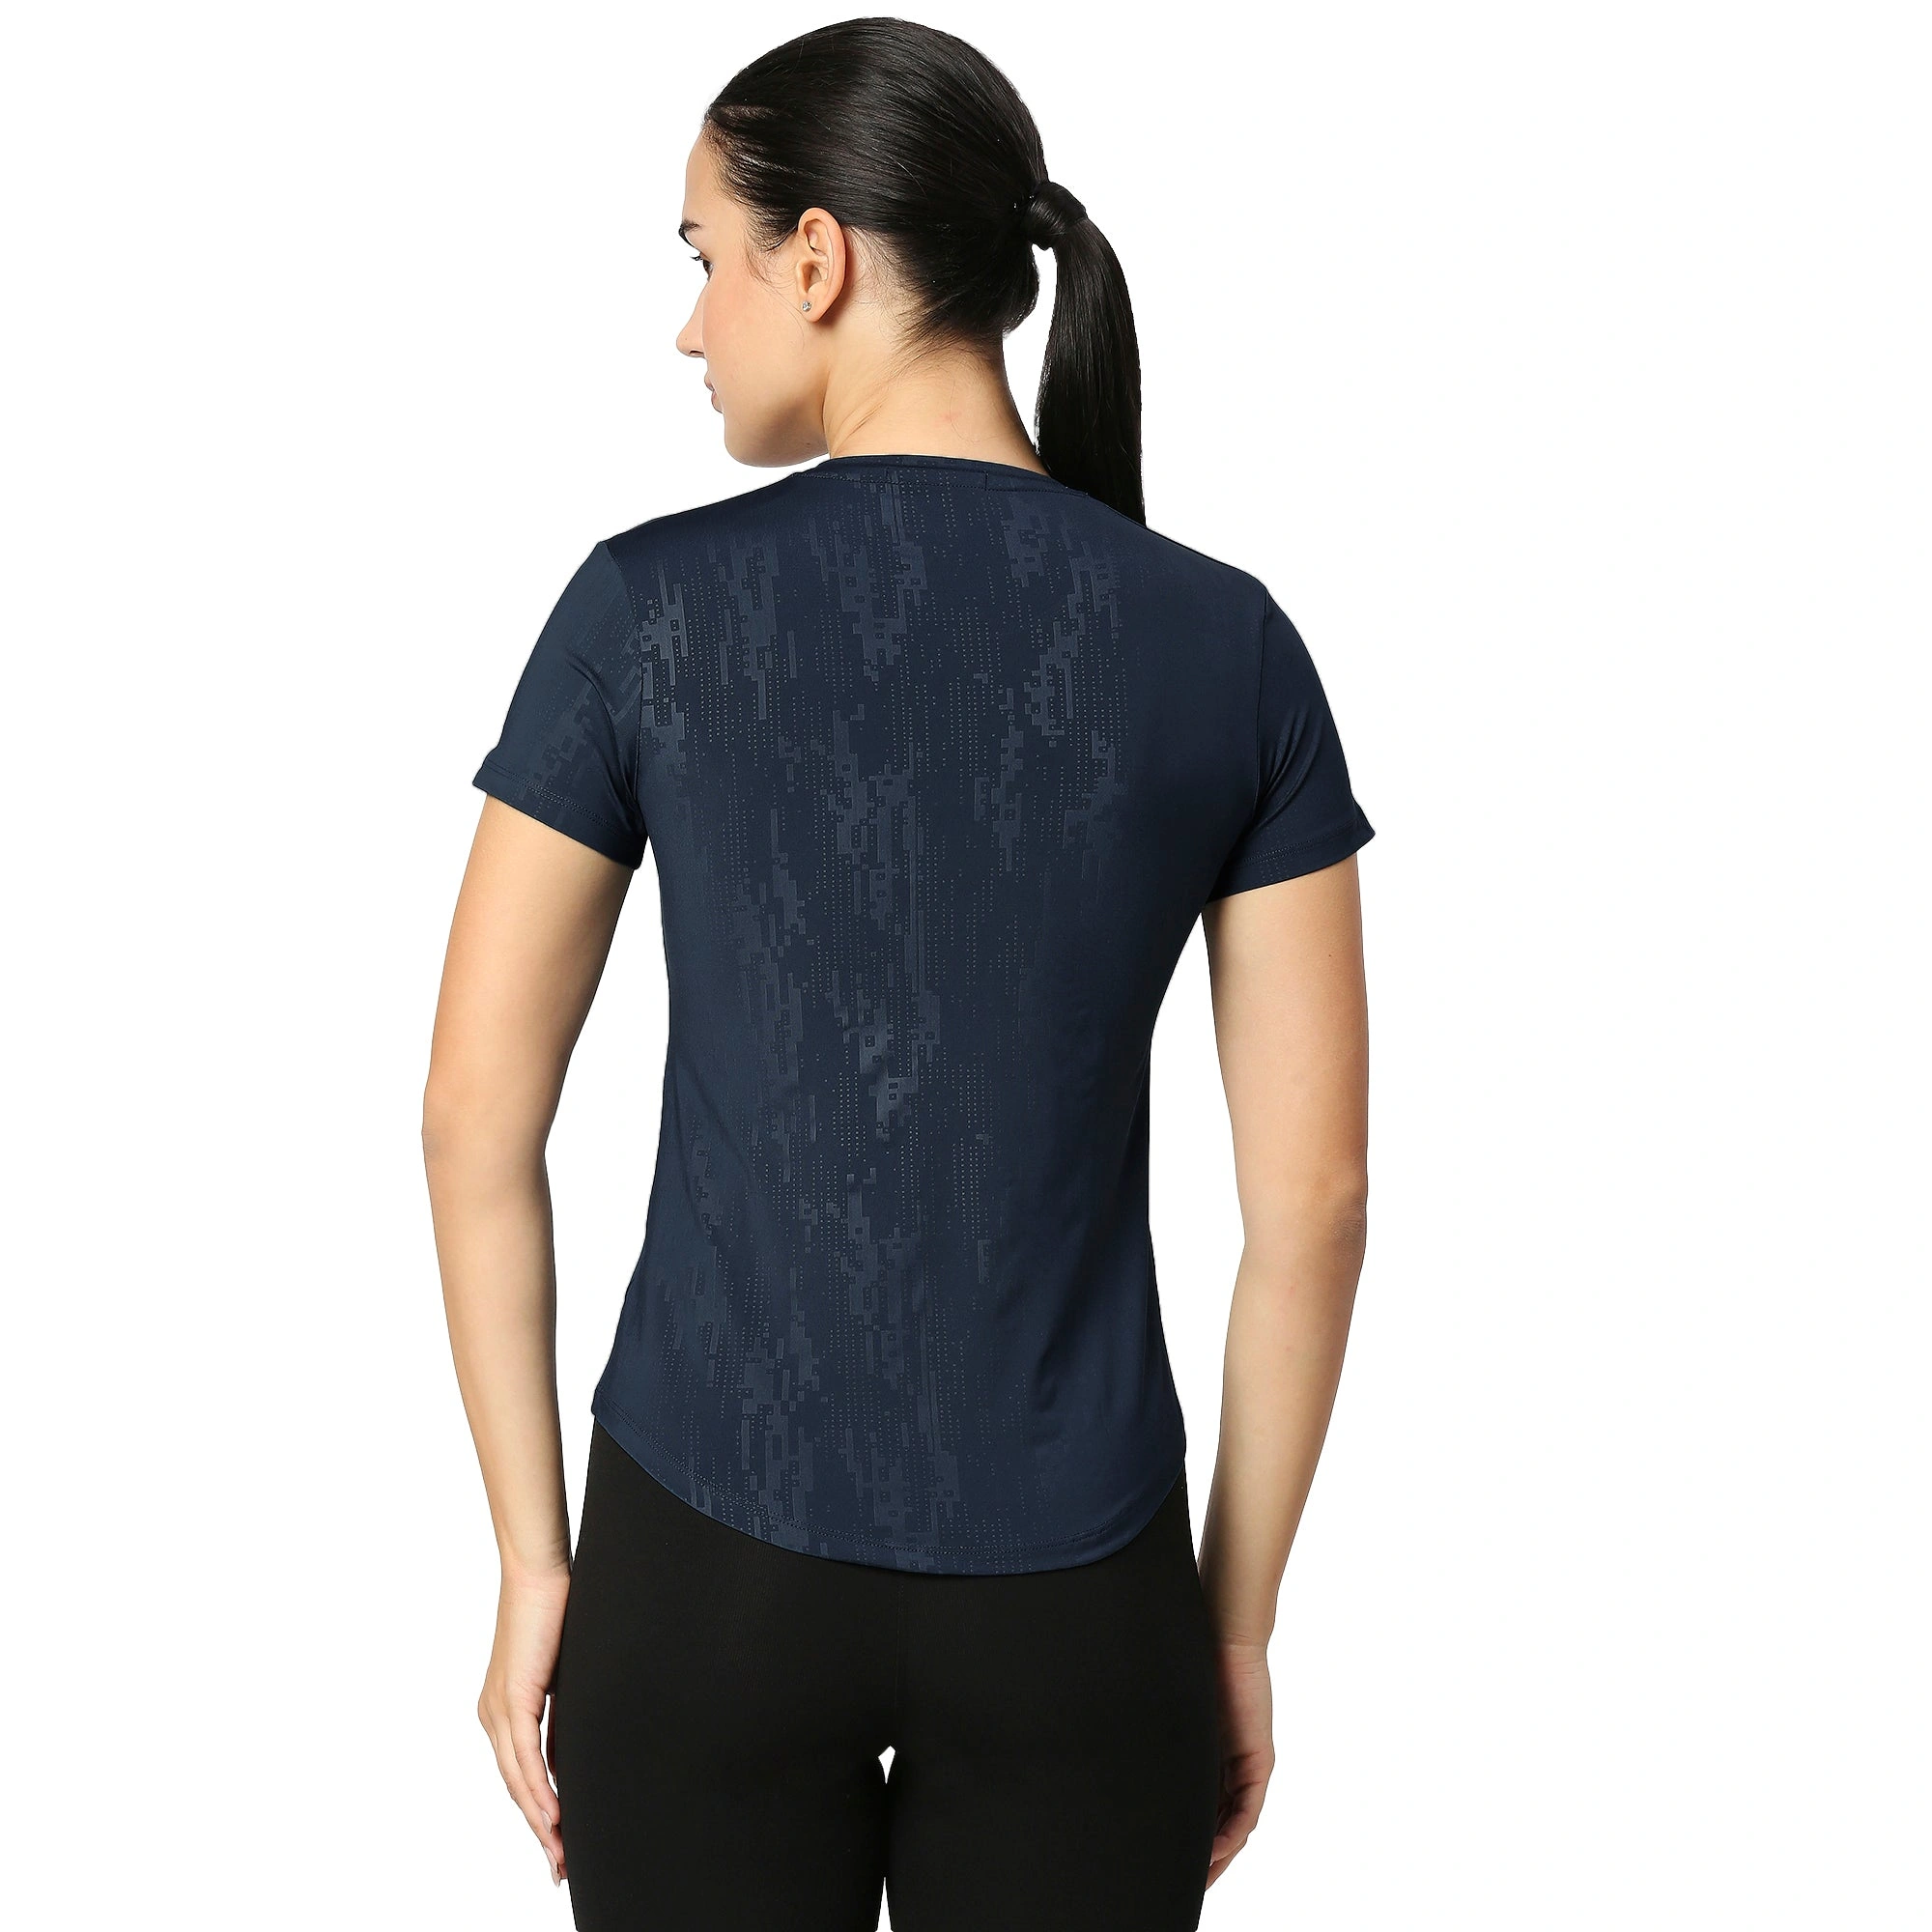 Curved Hem Emboss Print Gym Workout T-Shirt -M-NAVY BLUE-3